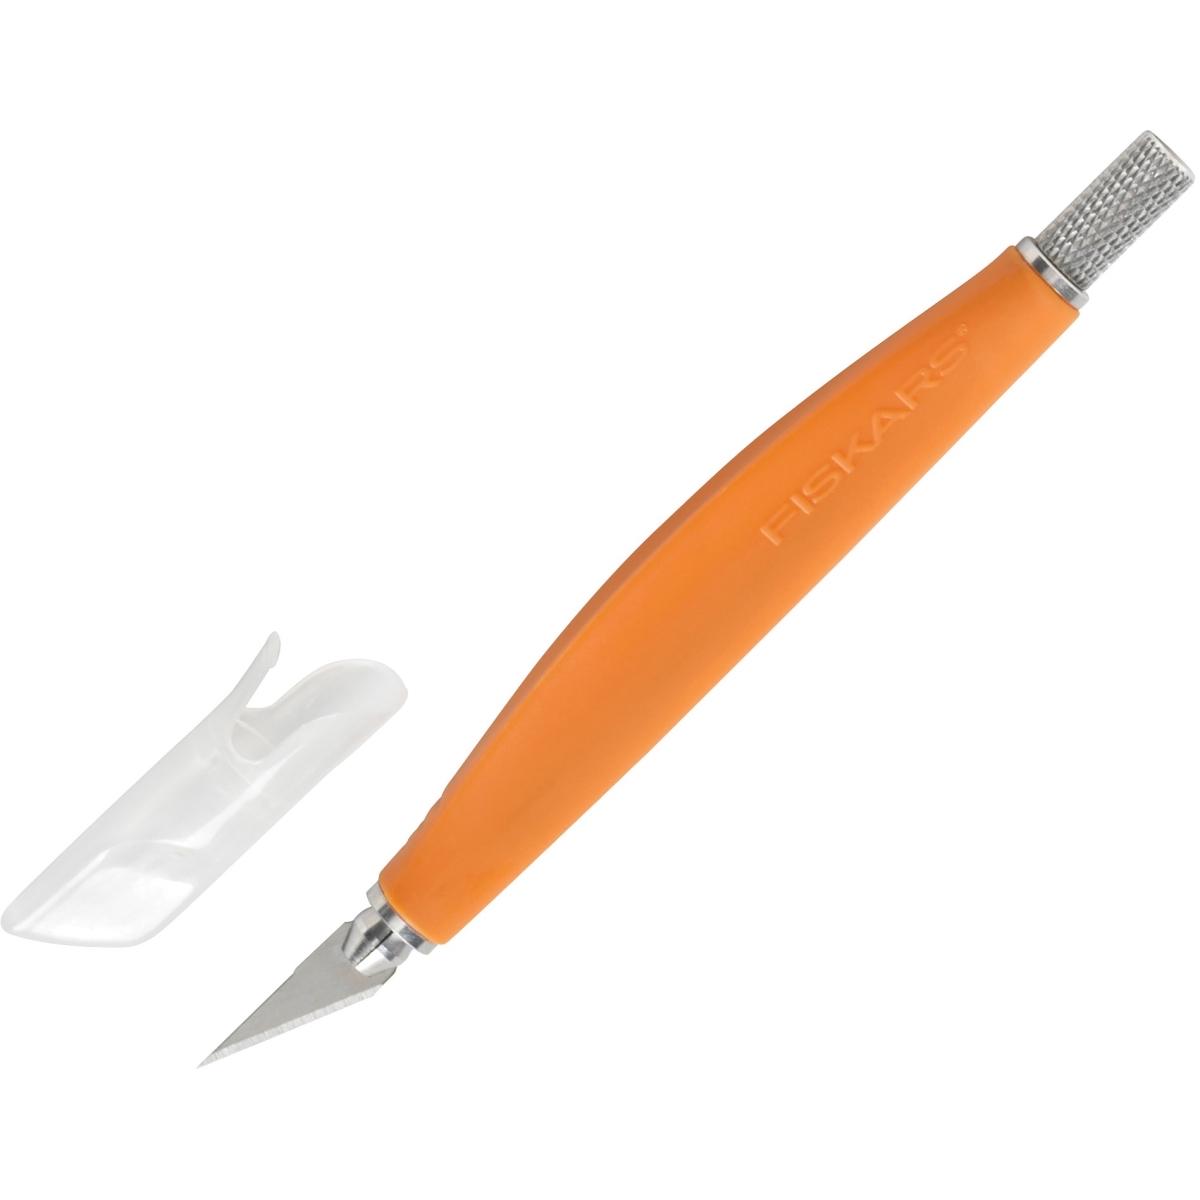 Fsk1670001003 Softgrip Utility Knife - Medium Duty, Orange